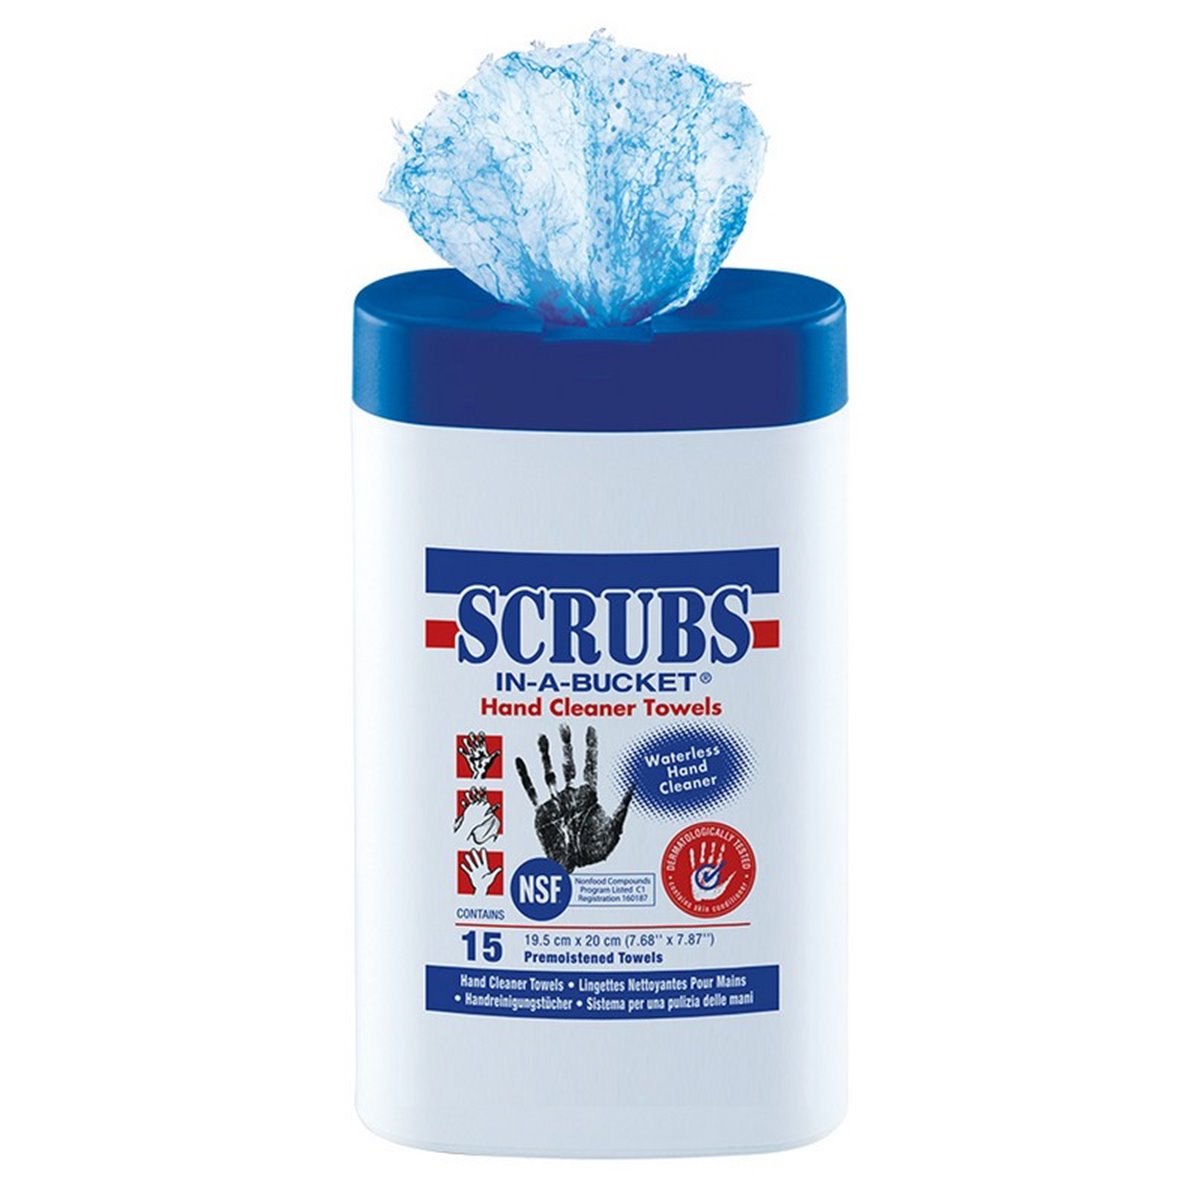 SCRUBS hand cleaning cloths 19.5x20cm, blue, 15 pieces.